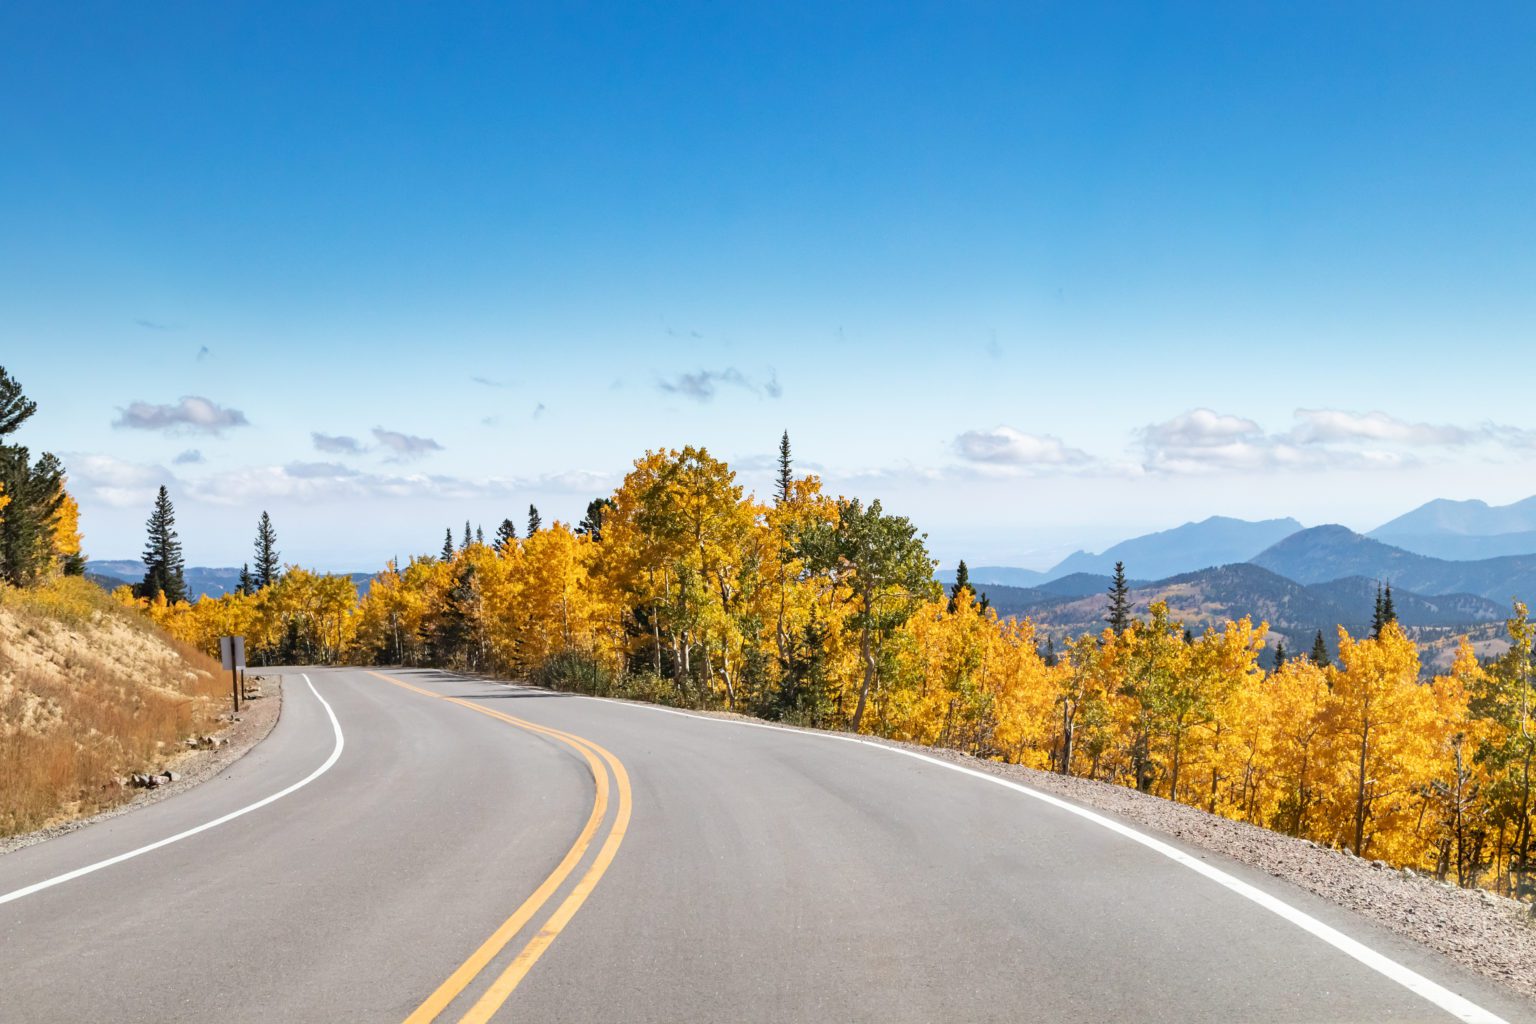 Empty highway winding through a golden fall aspen forest in a Colorado mountain landscape scene